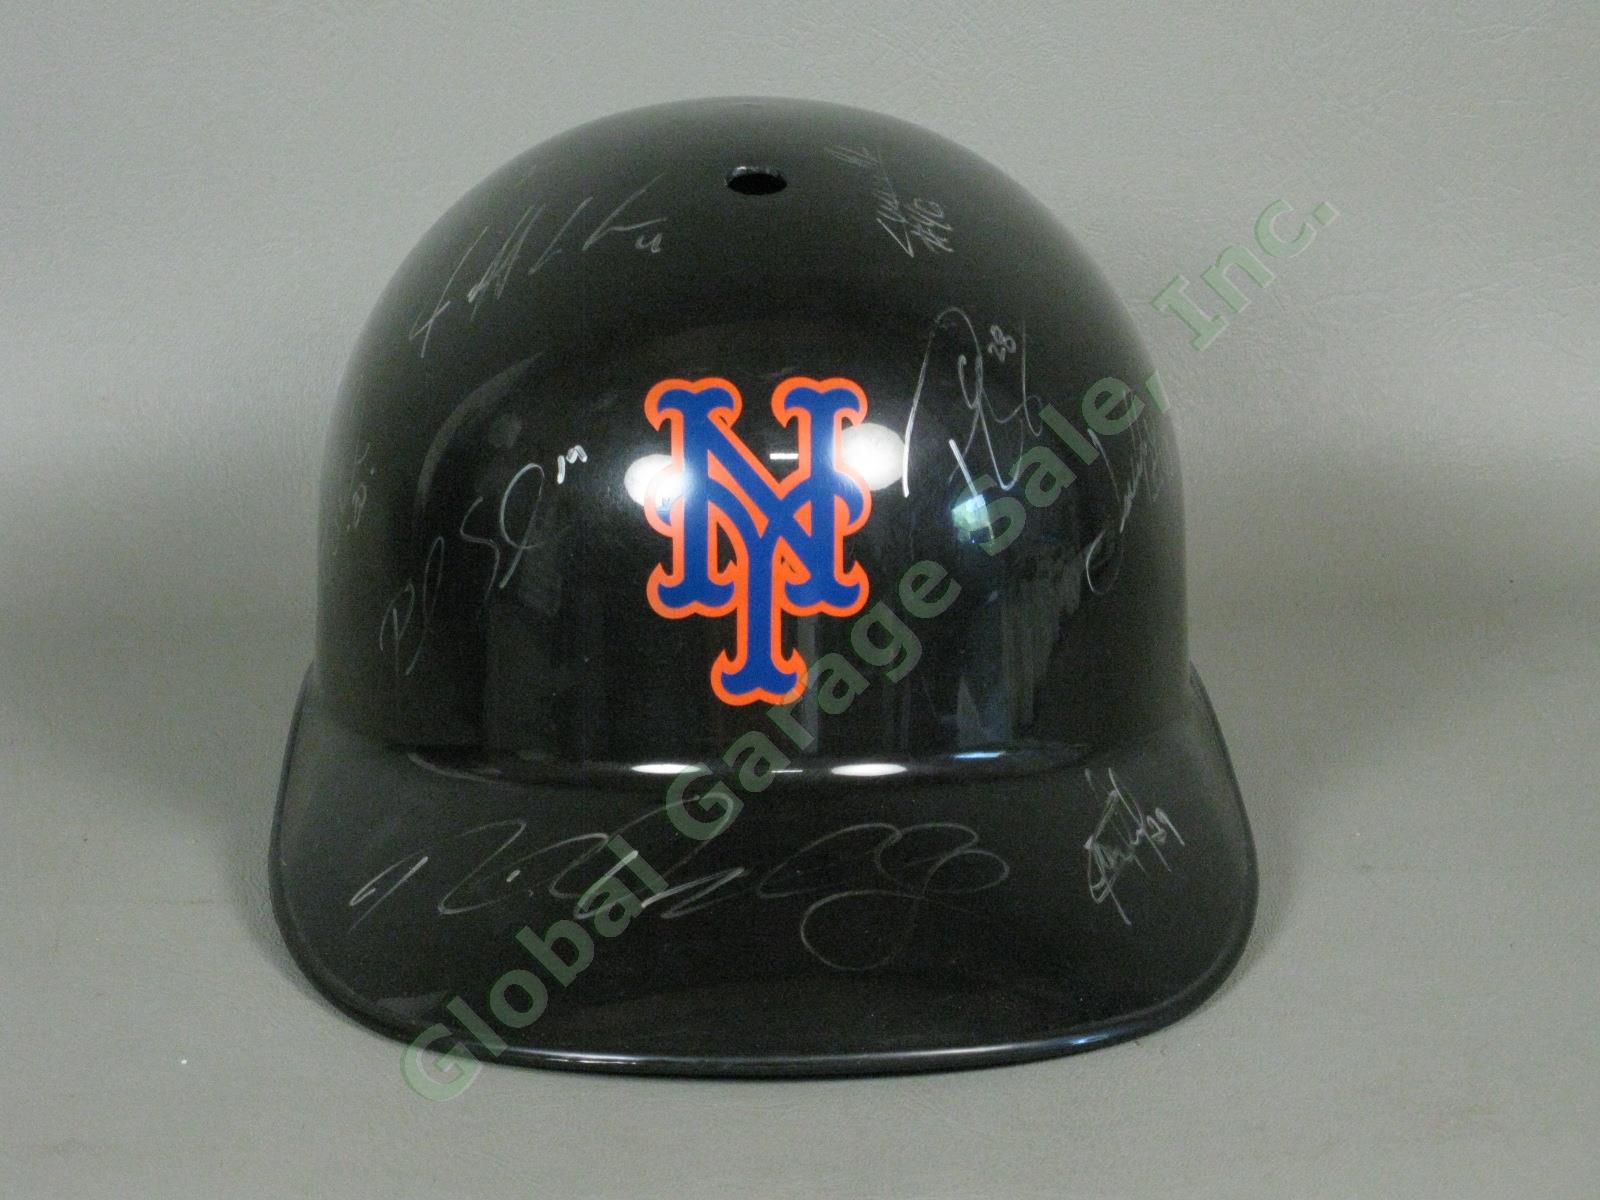 2012 Brooklyn Cyclones Team Signed Baseball Helmet MiLB MLB NYPL New York Mets